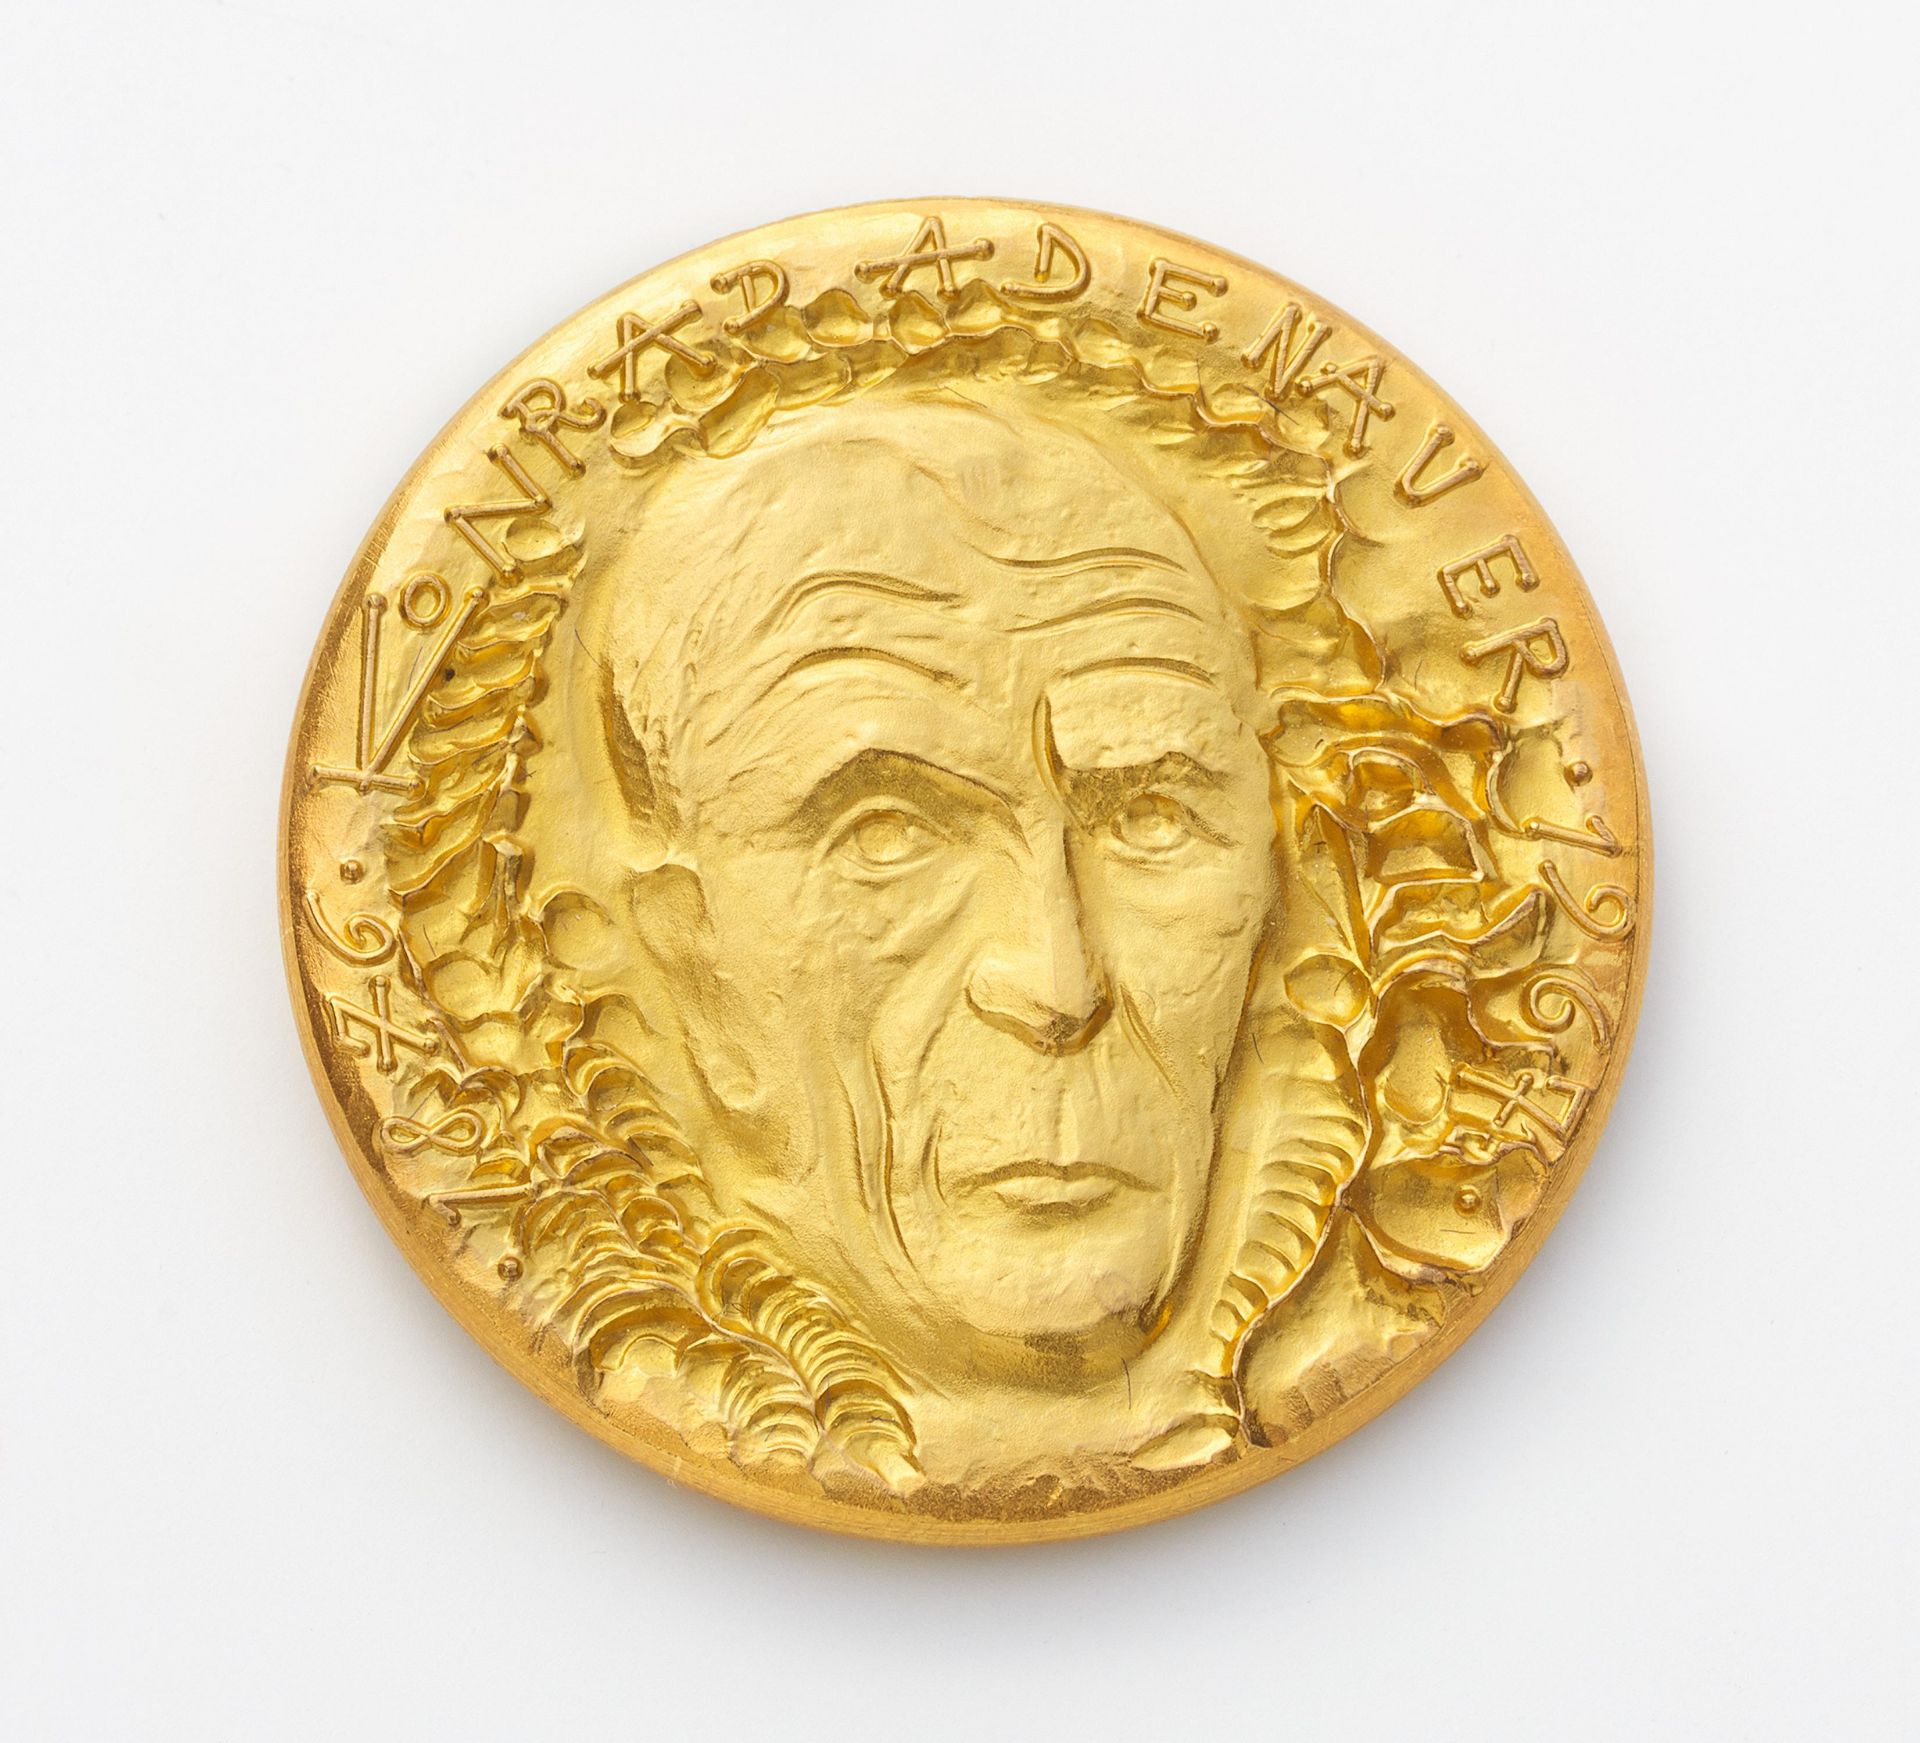 Dalí, Salvador Figueras/Spanien 1904 - 1989 Hommage à Konrad Adenauer. 1976. Medaille aus Gold 900/